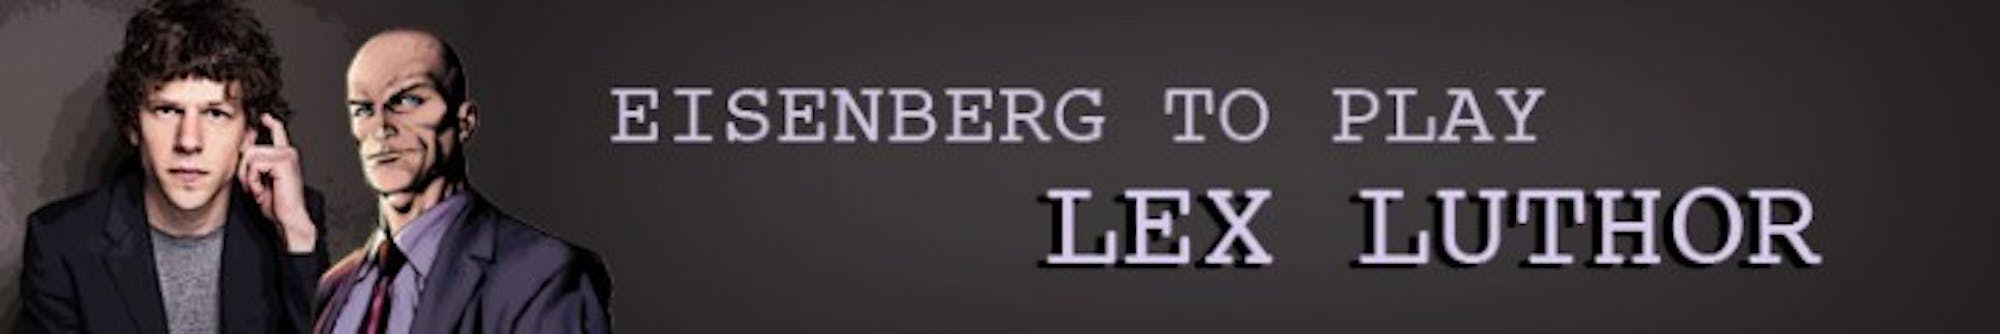 eisenberg_lex_luthor_WEB